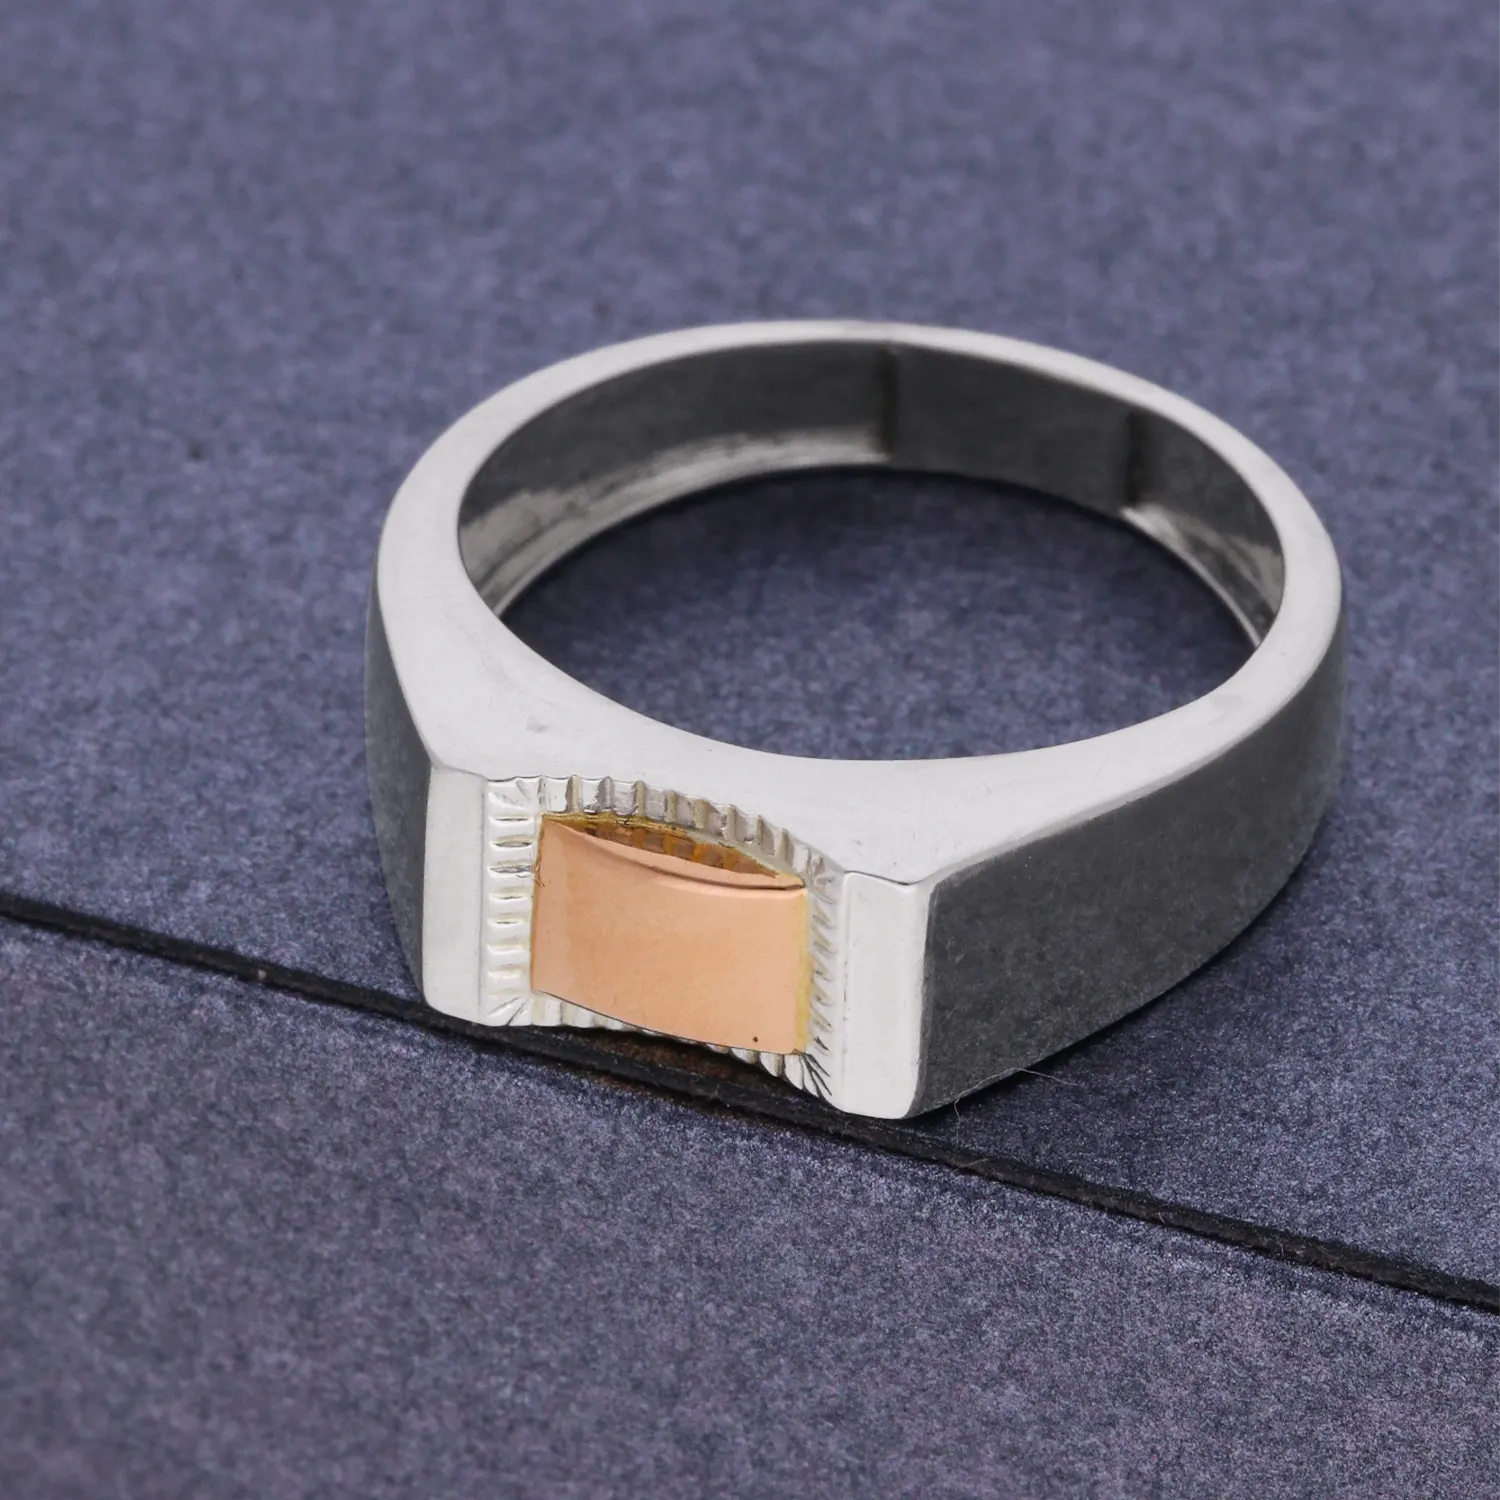 Designer Men's Polished Beveled Edge 950 Platinum Wedding Band, 6mm